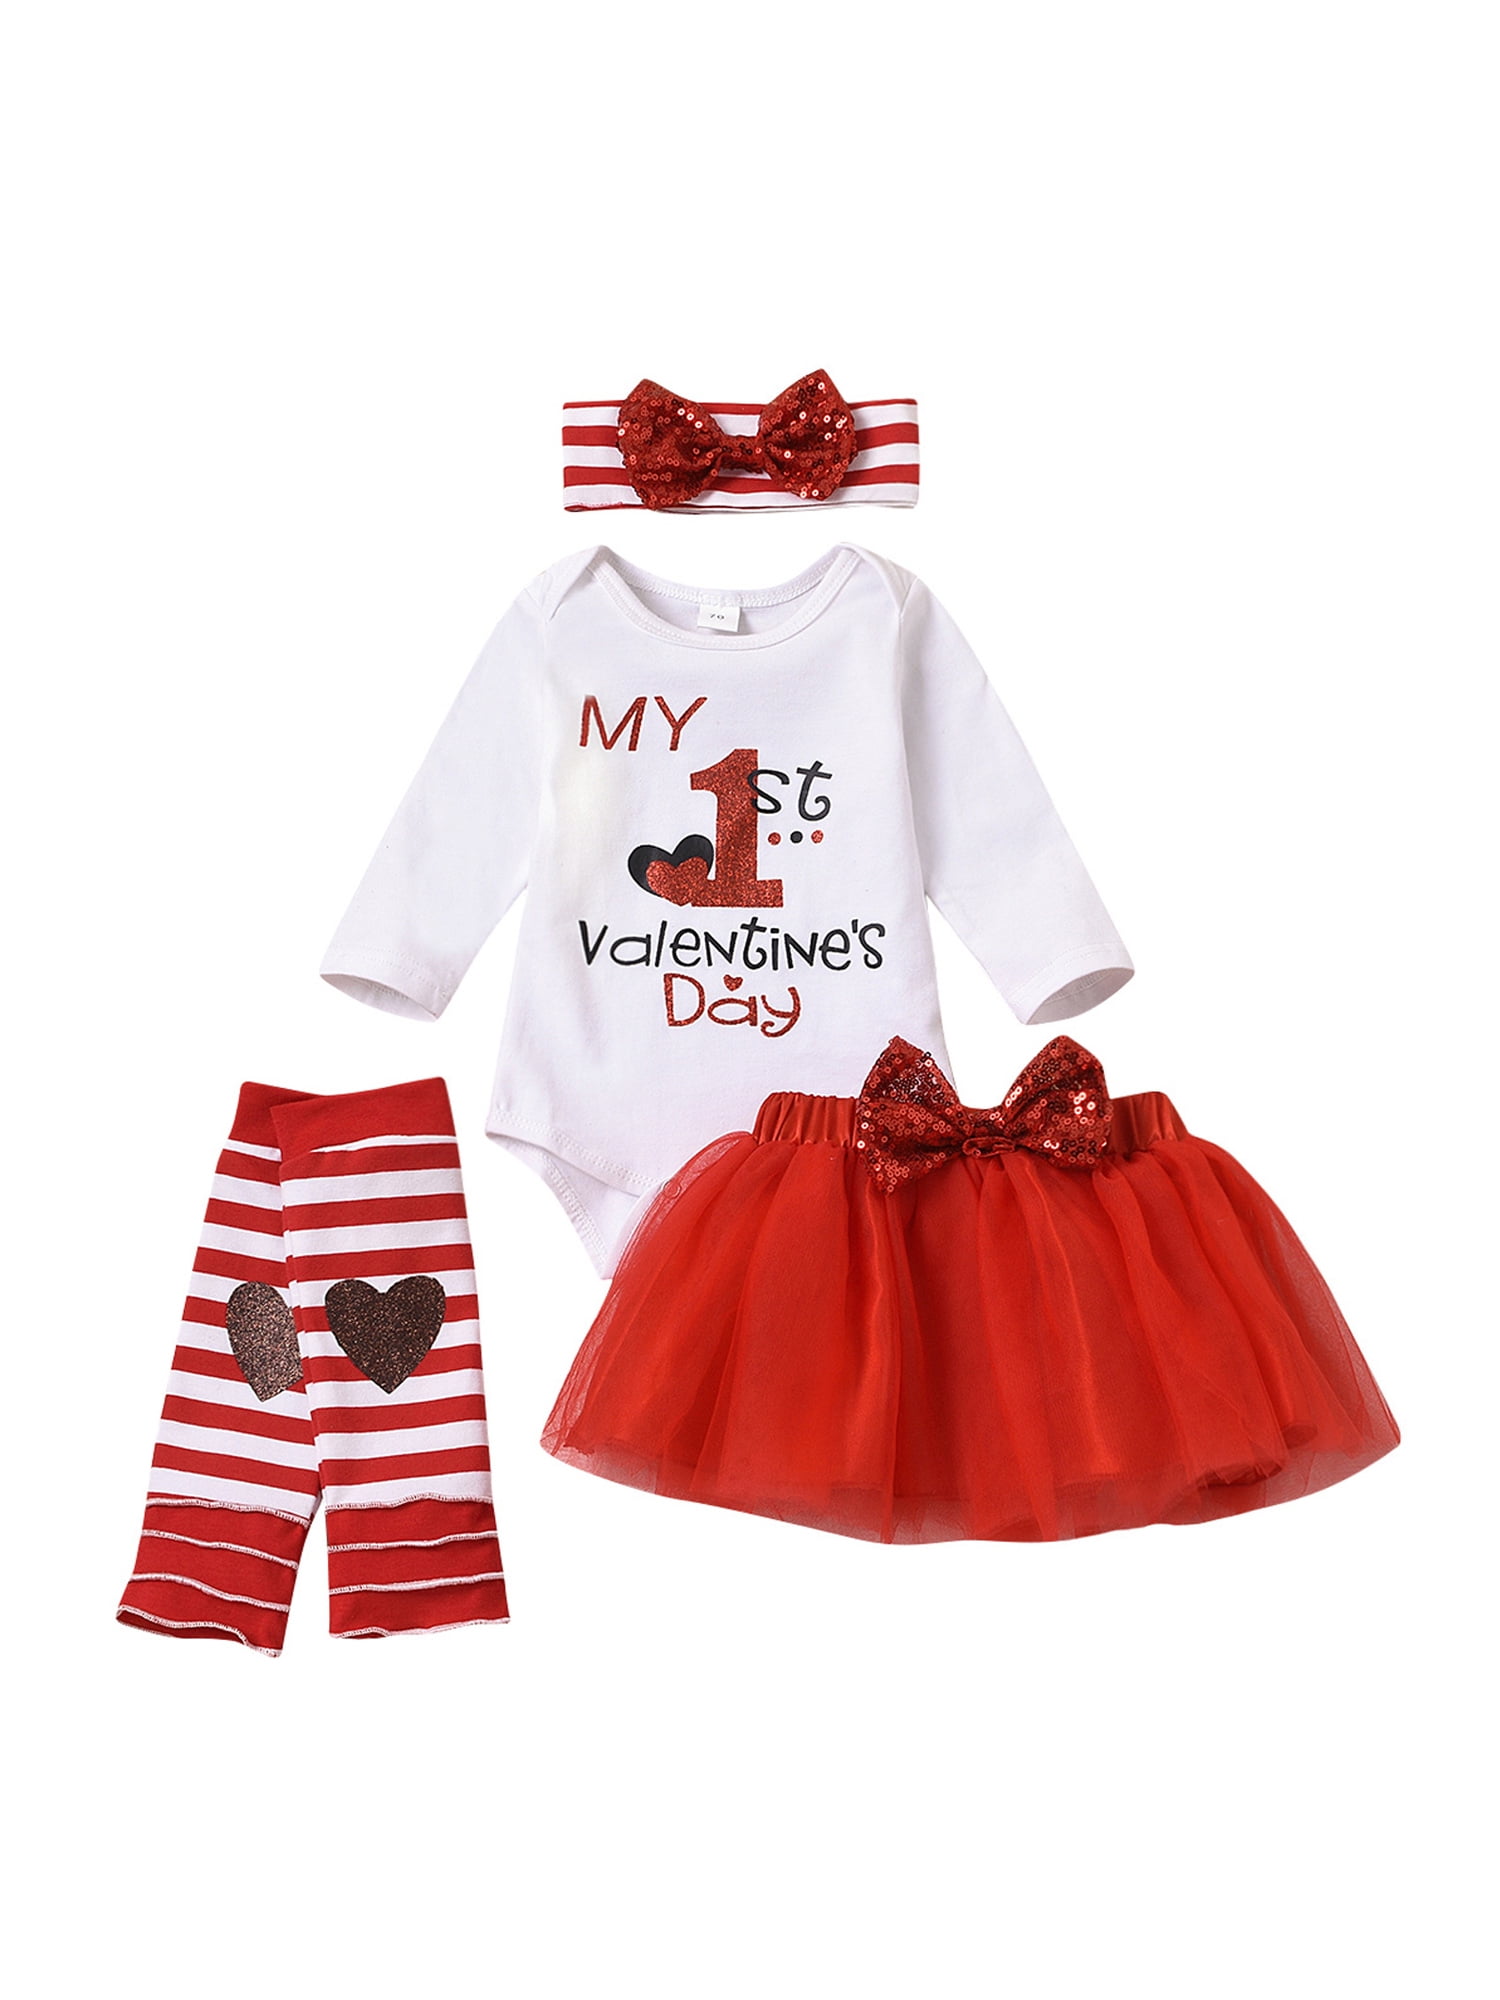 Details about   Newborn Infant Baby Girl Valentine Romper Top+Tutu Skirt+Leg Warmer+Hairband Set 